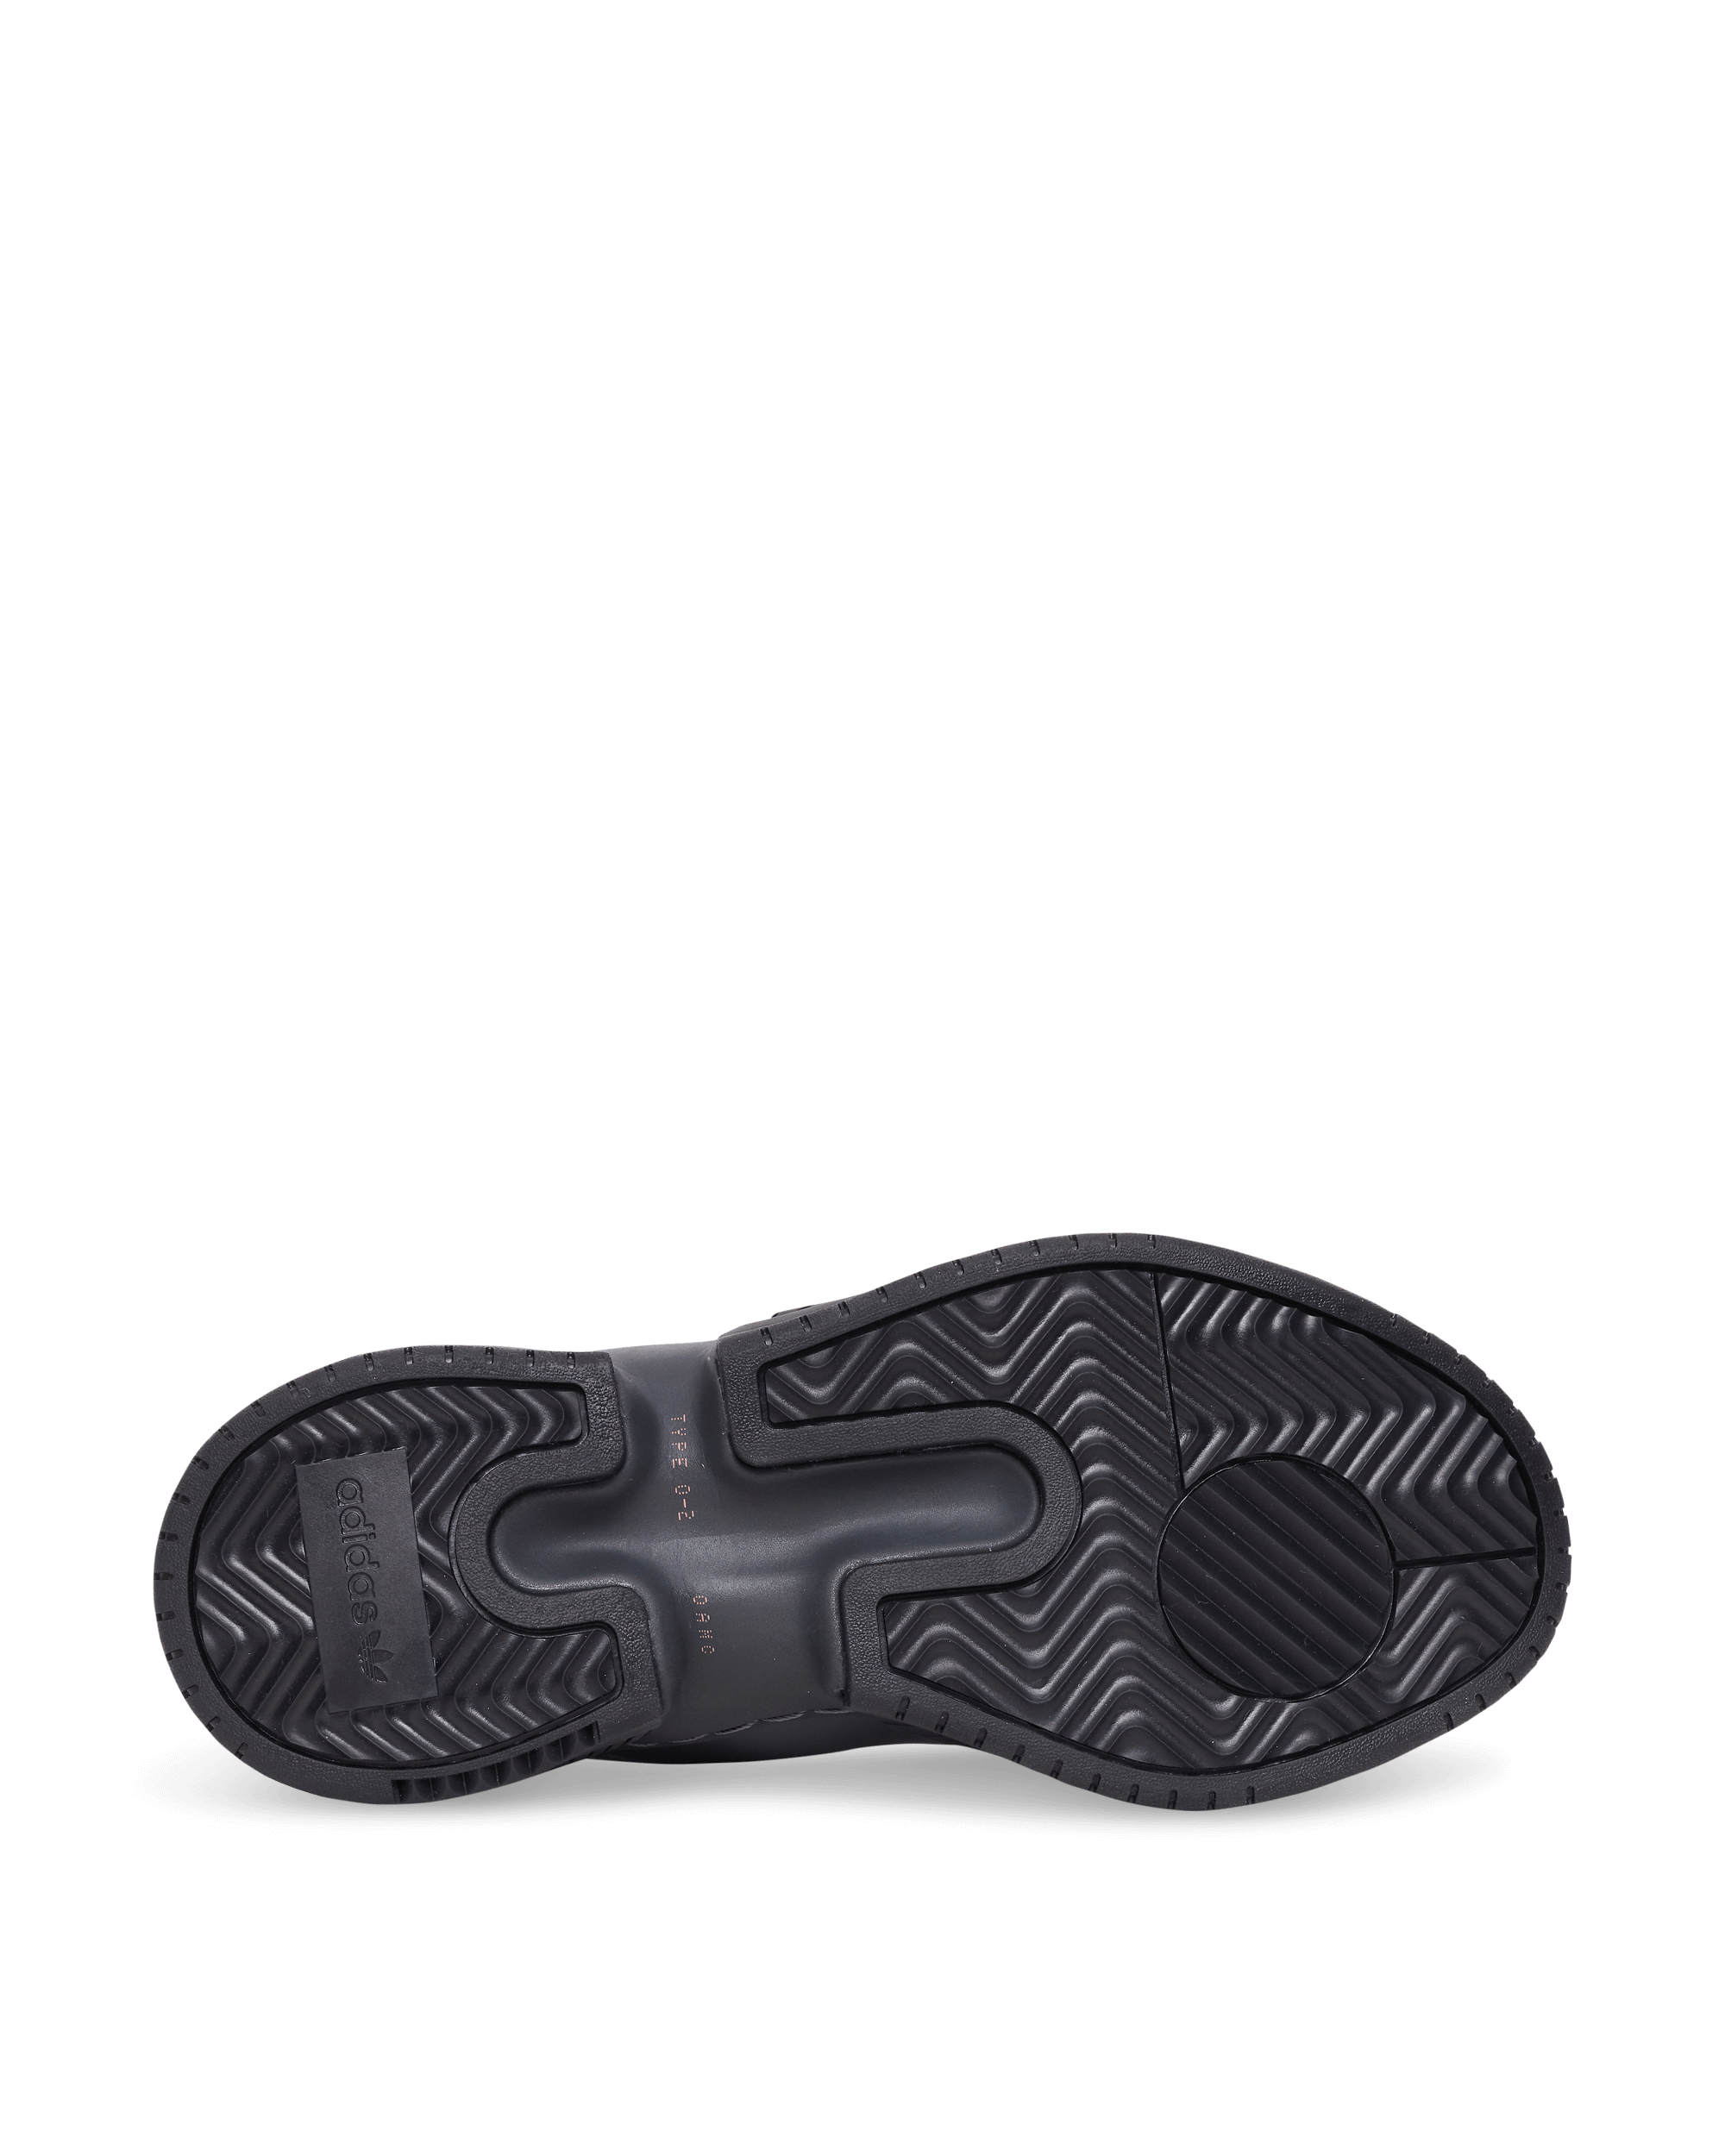 adidas X Oamc Type O-2 Grey Five/Core Black Sneakers Low FV7114 001